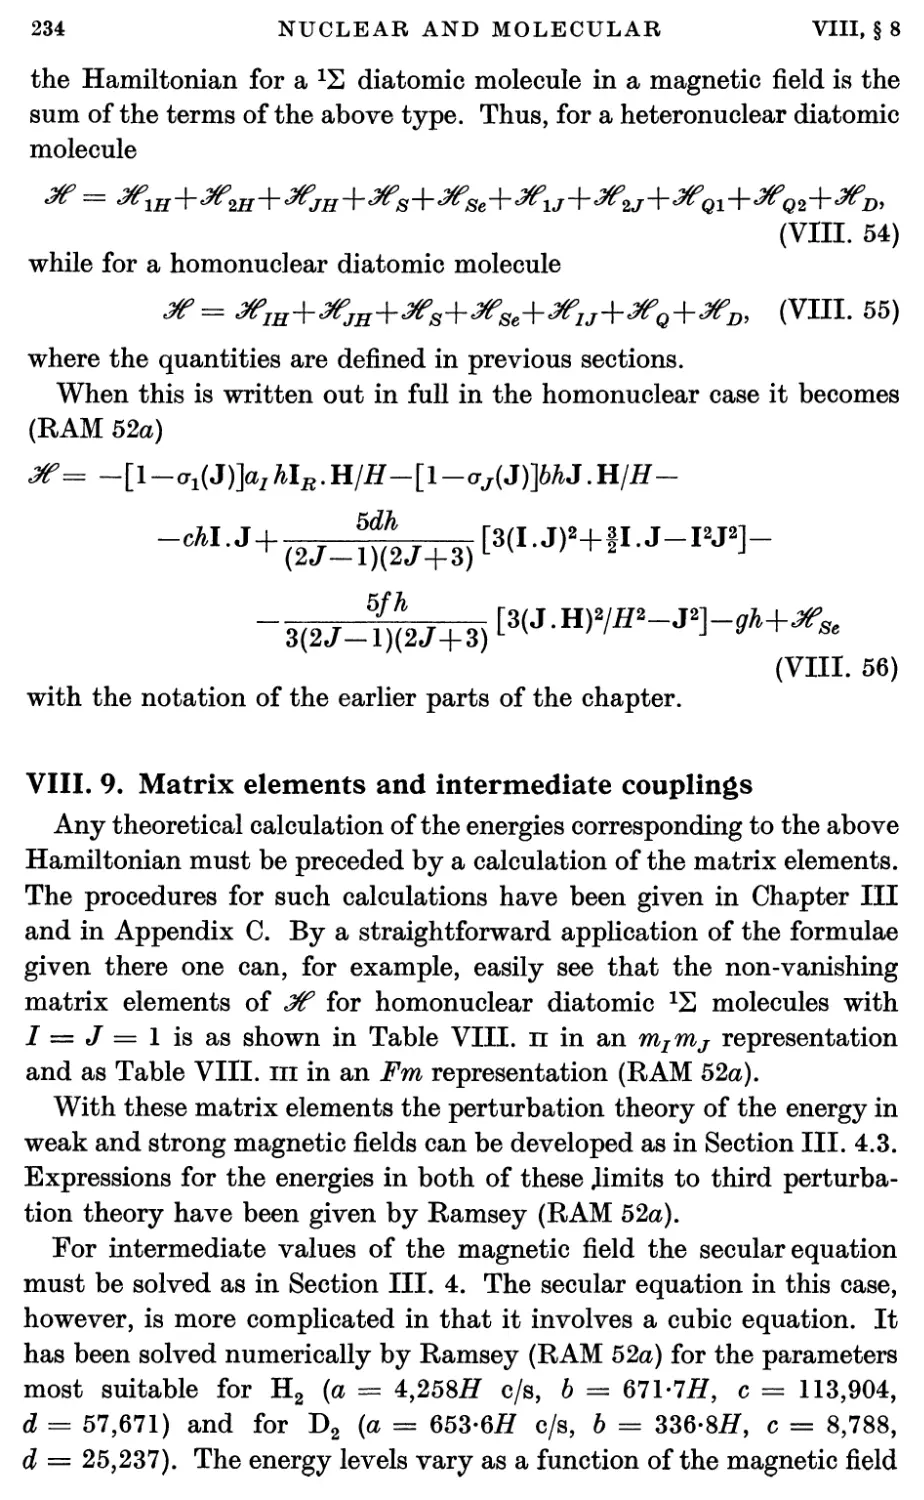 VIII.9. Matrix Elements and Intermediate Couplings